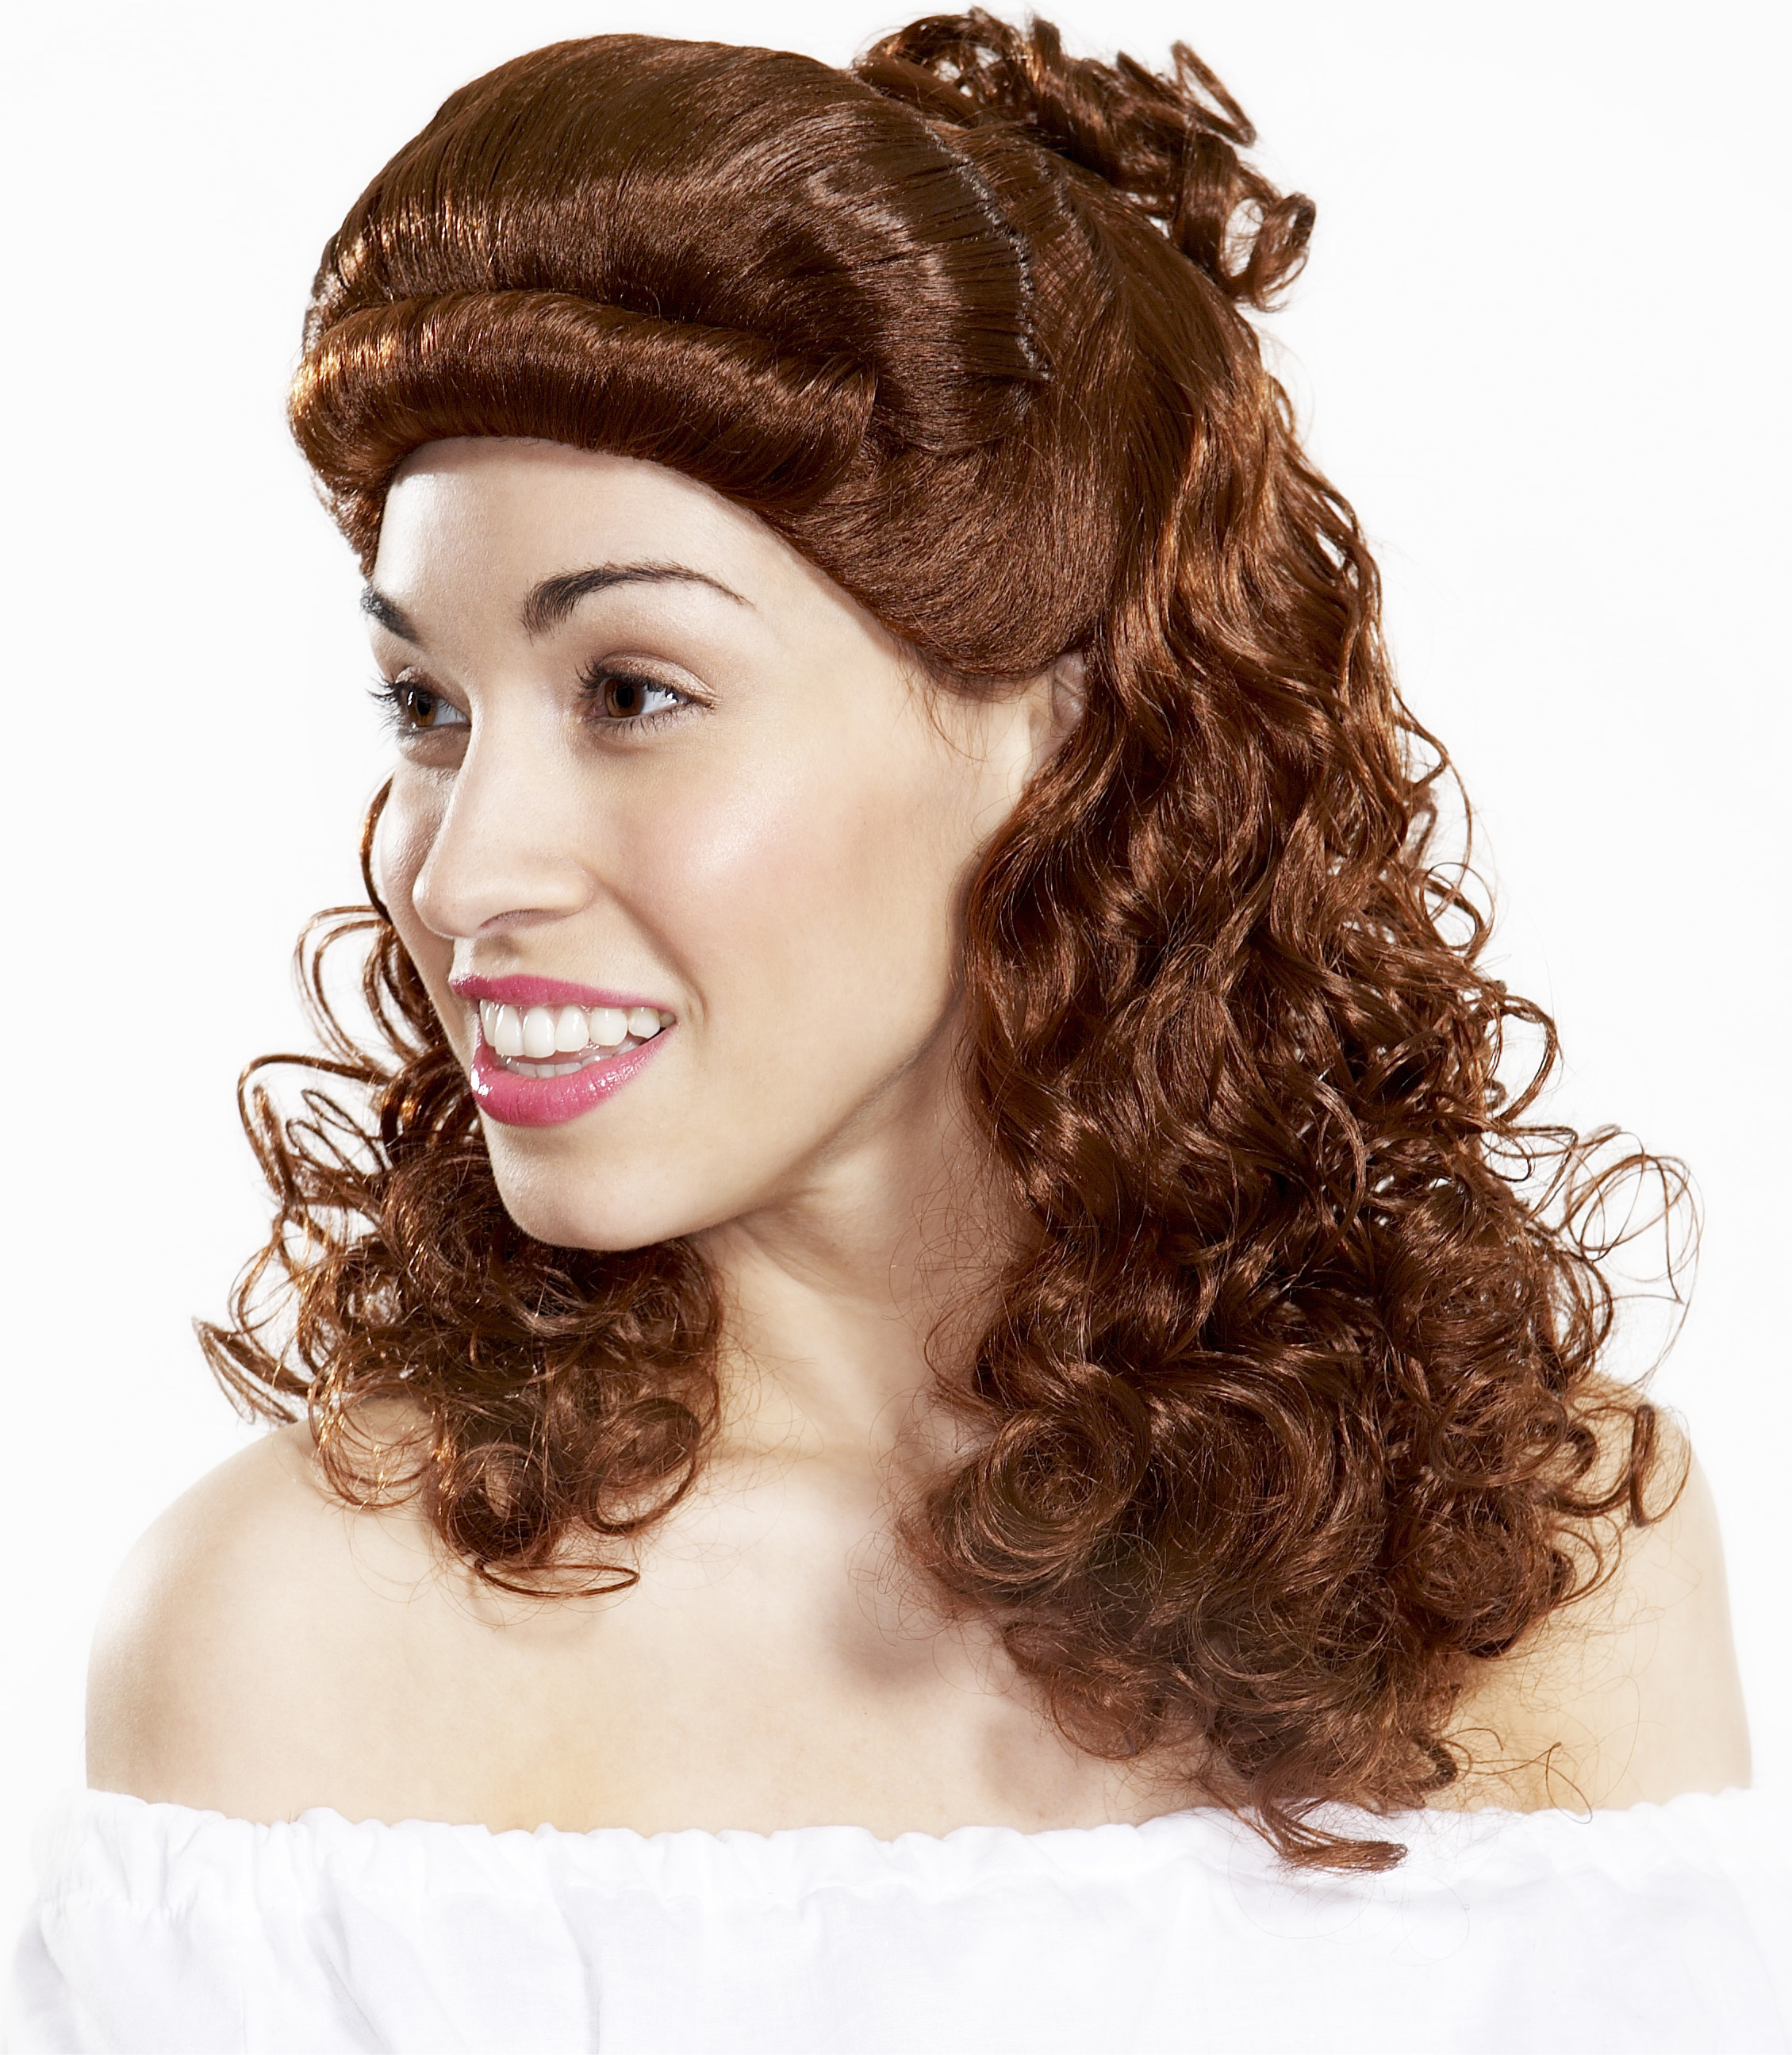 AMC Women's Southern Belle Adult Wig